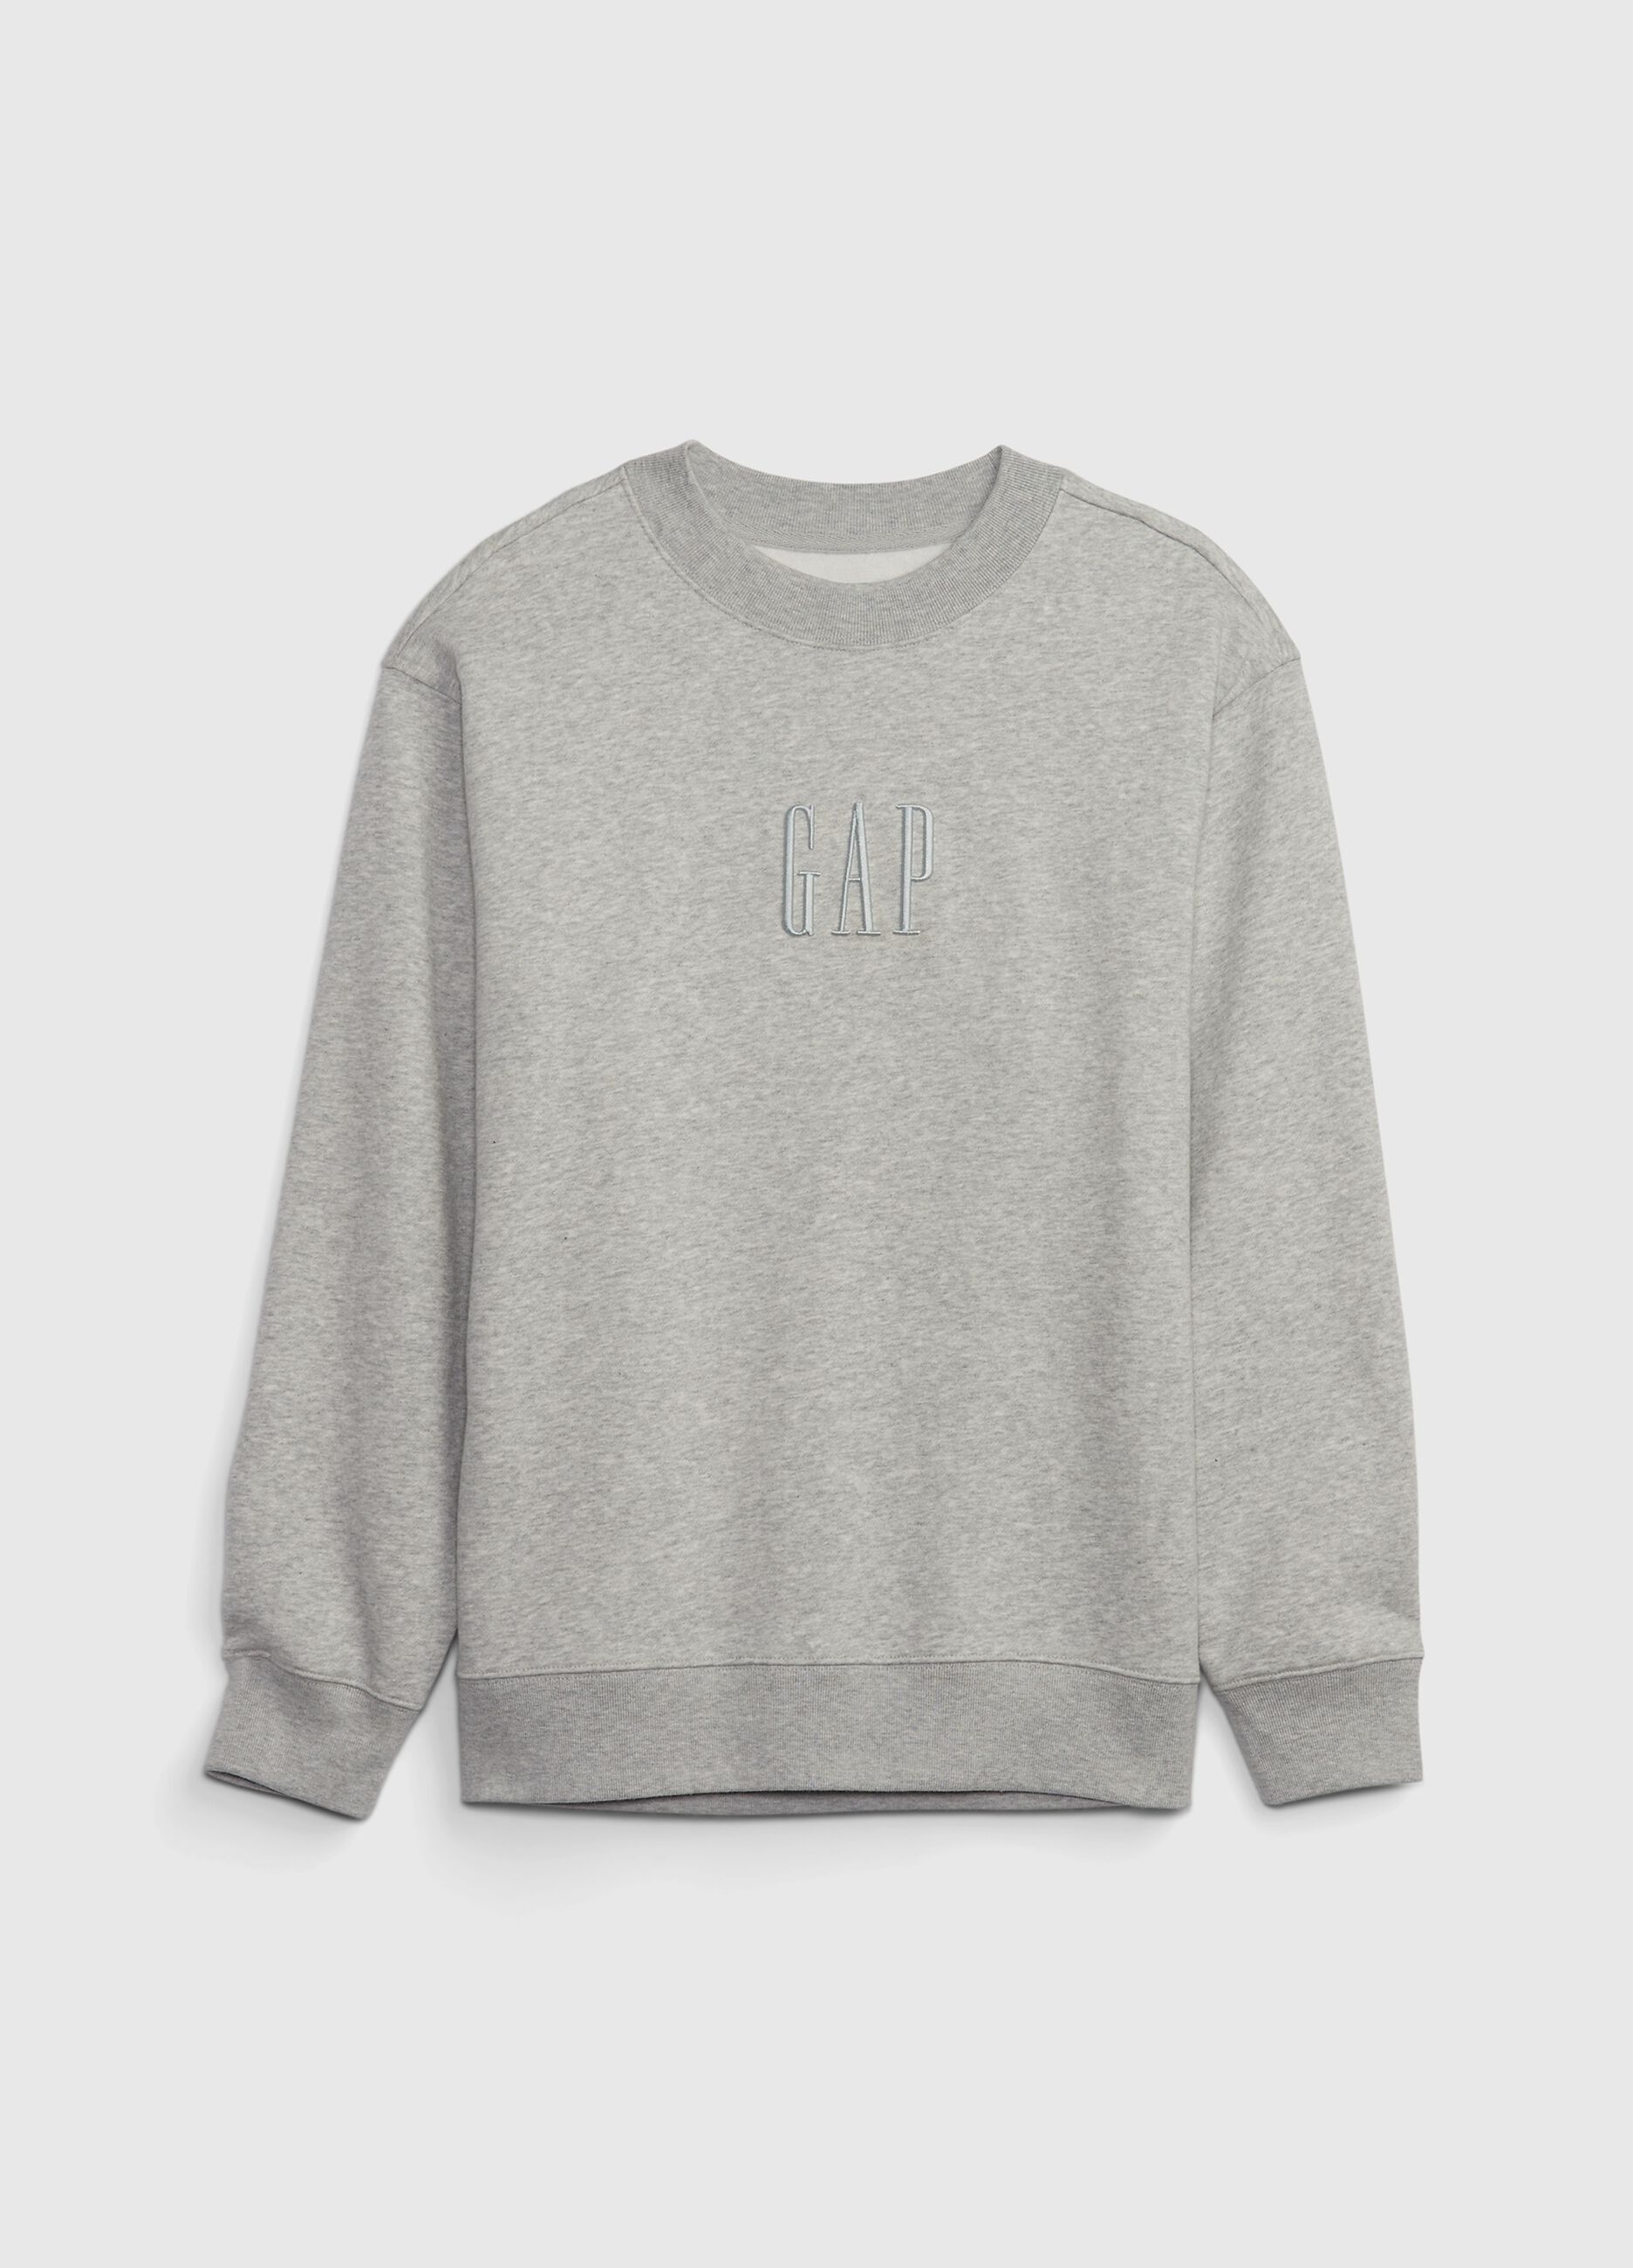 Boyfriend-fit sweatshirt with logo embroidery